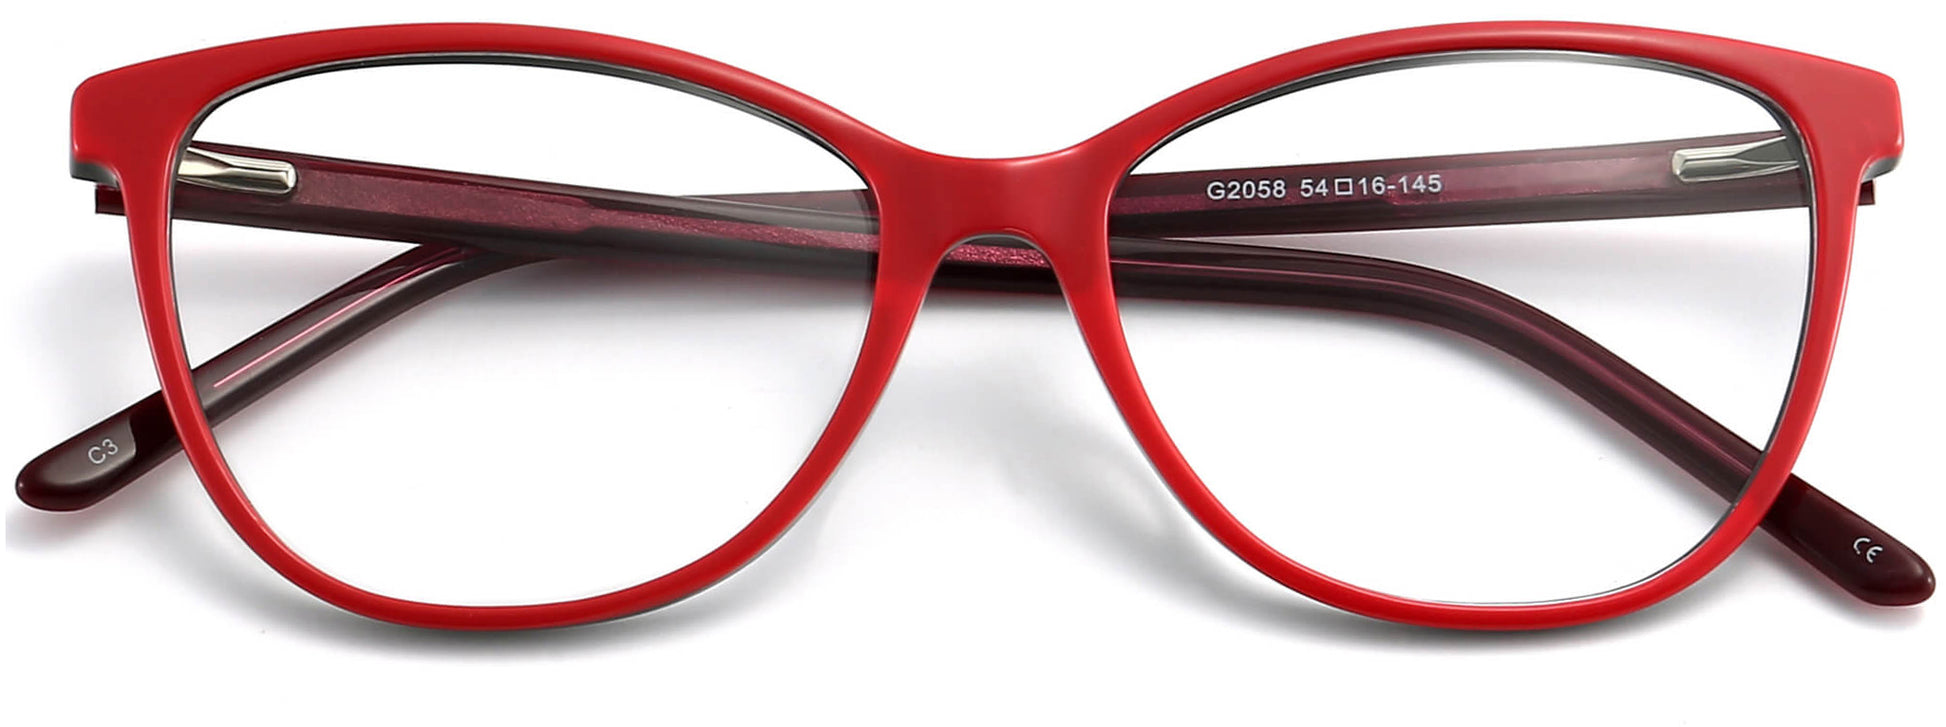 Tamura cateye red Eyeglasses from ANRRI, closed view